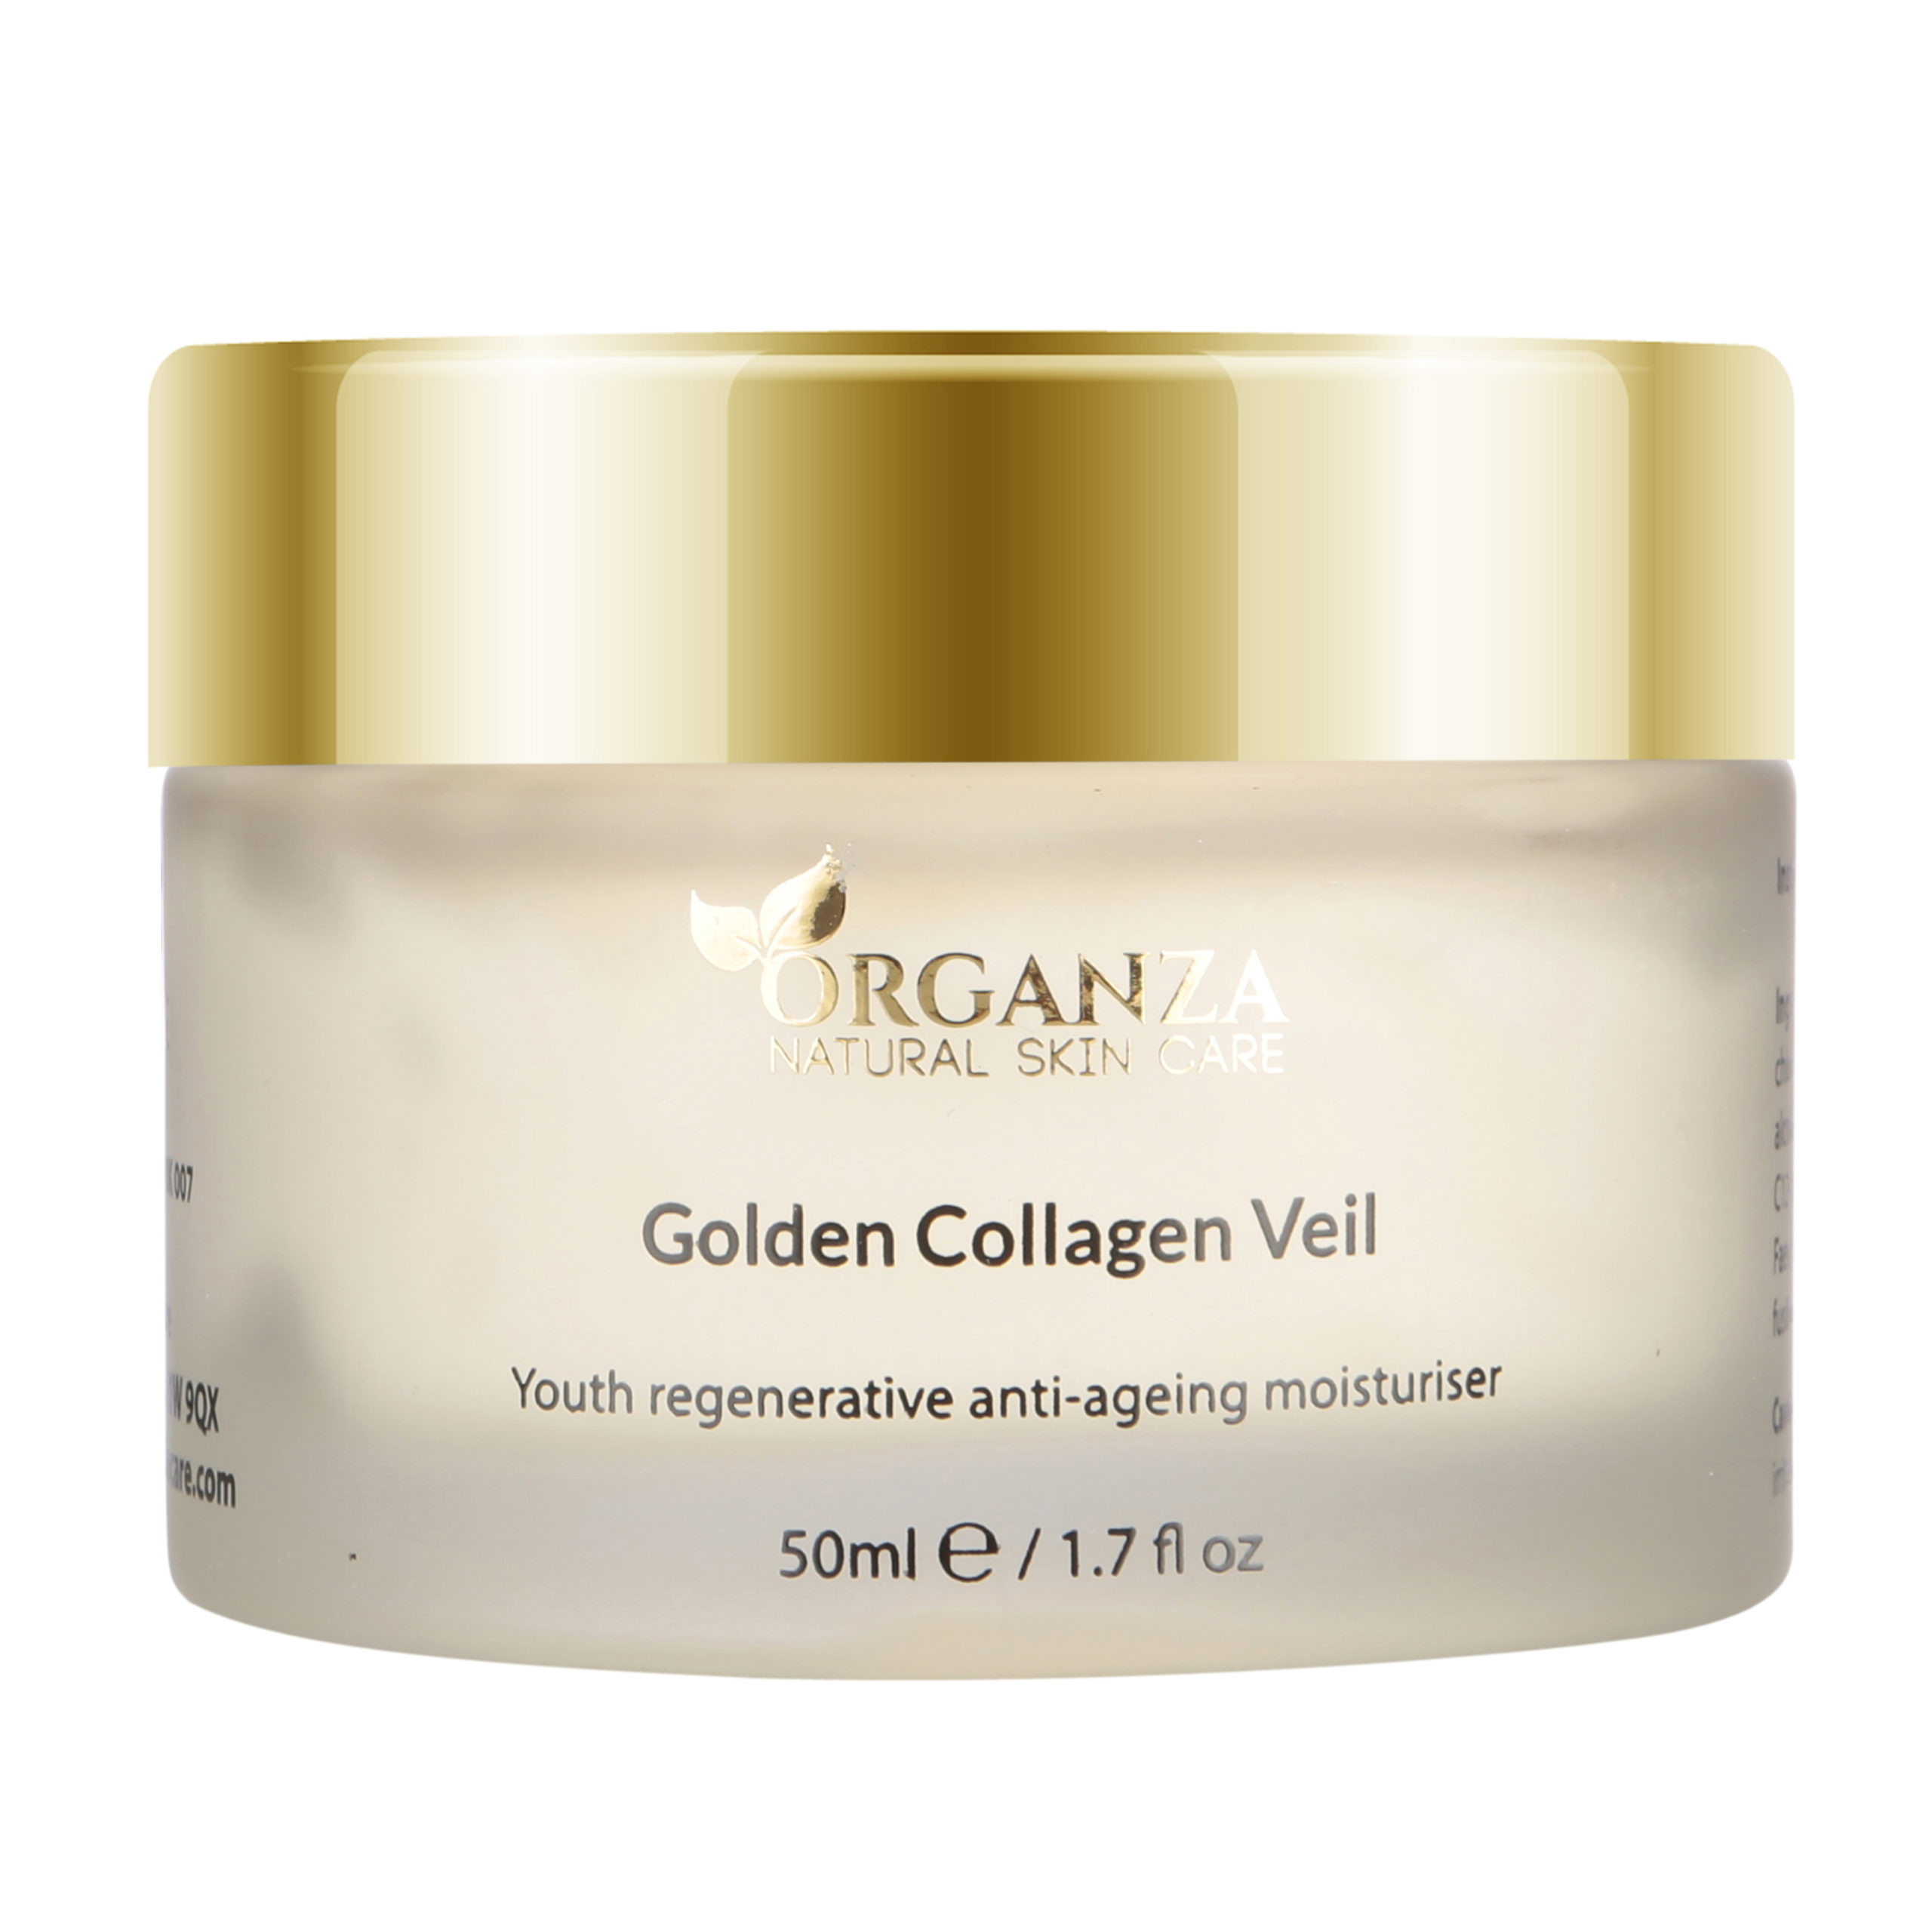 Golden Collagen Veil